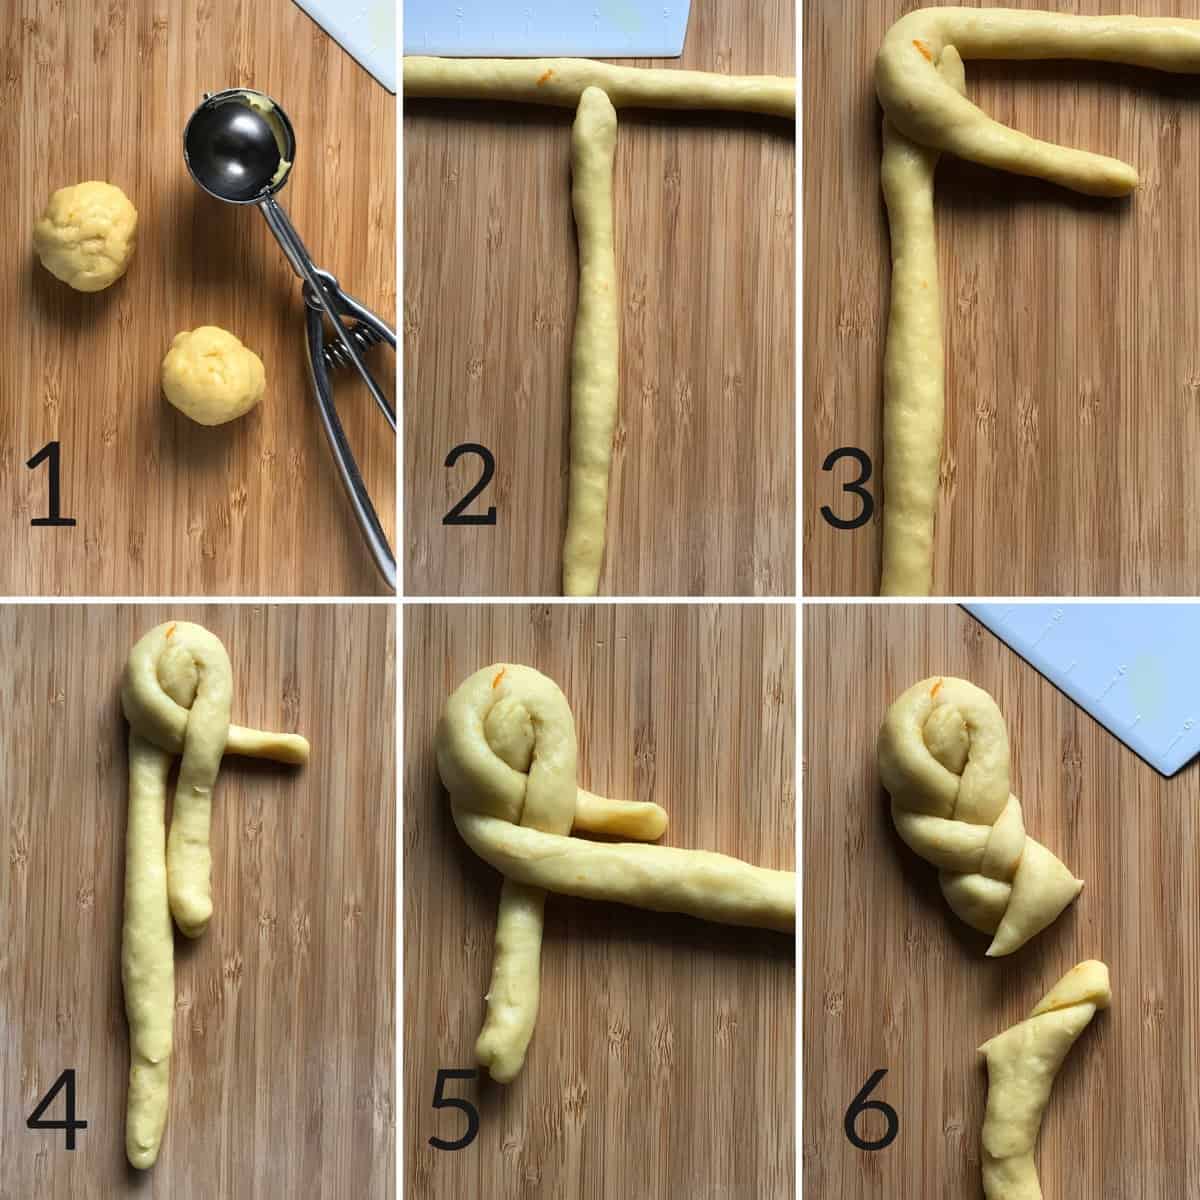 Step by step tutorial demonstrating how to make a braided koulourakia